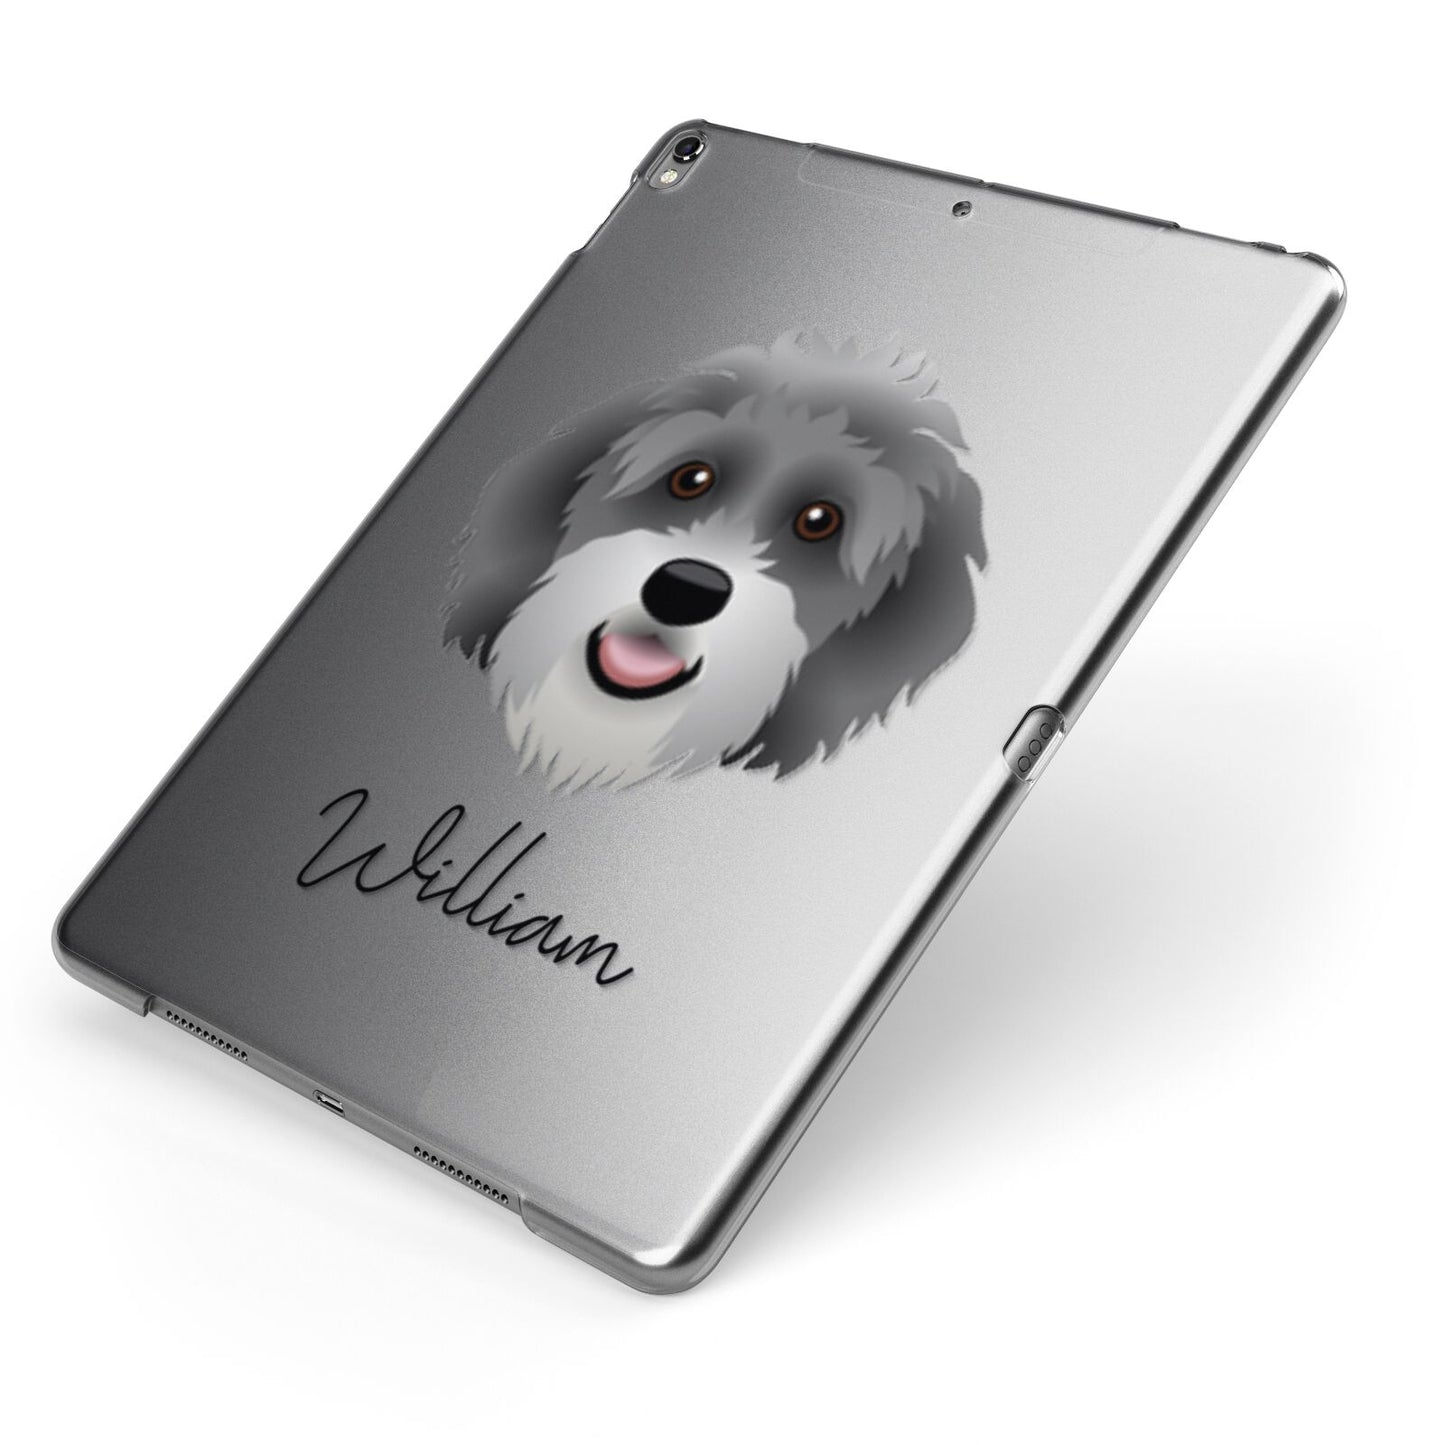 Aussiedoodle Personalised Apple iPad Case on Grey iPad Side View